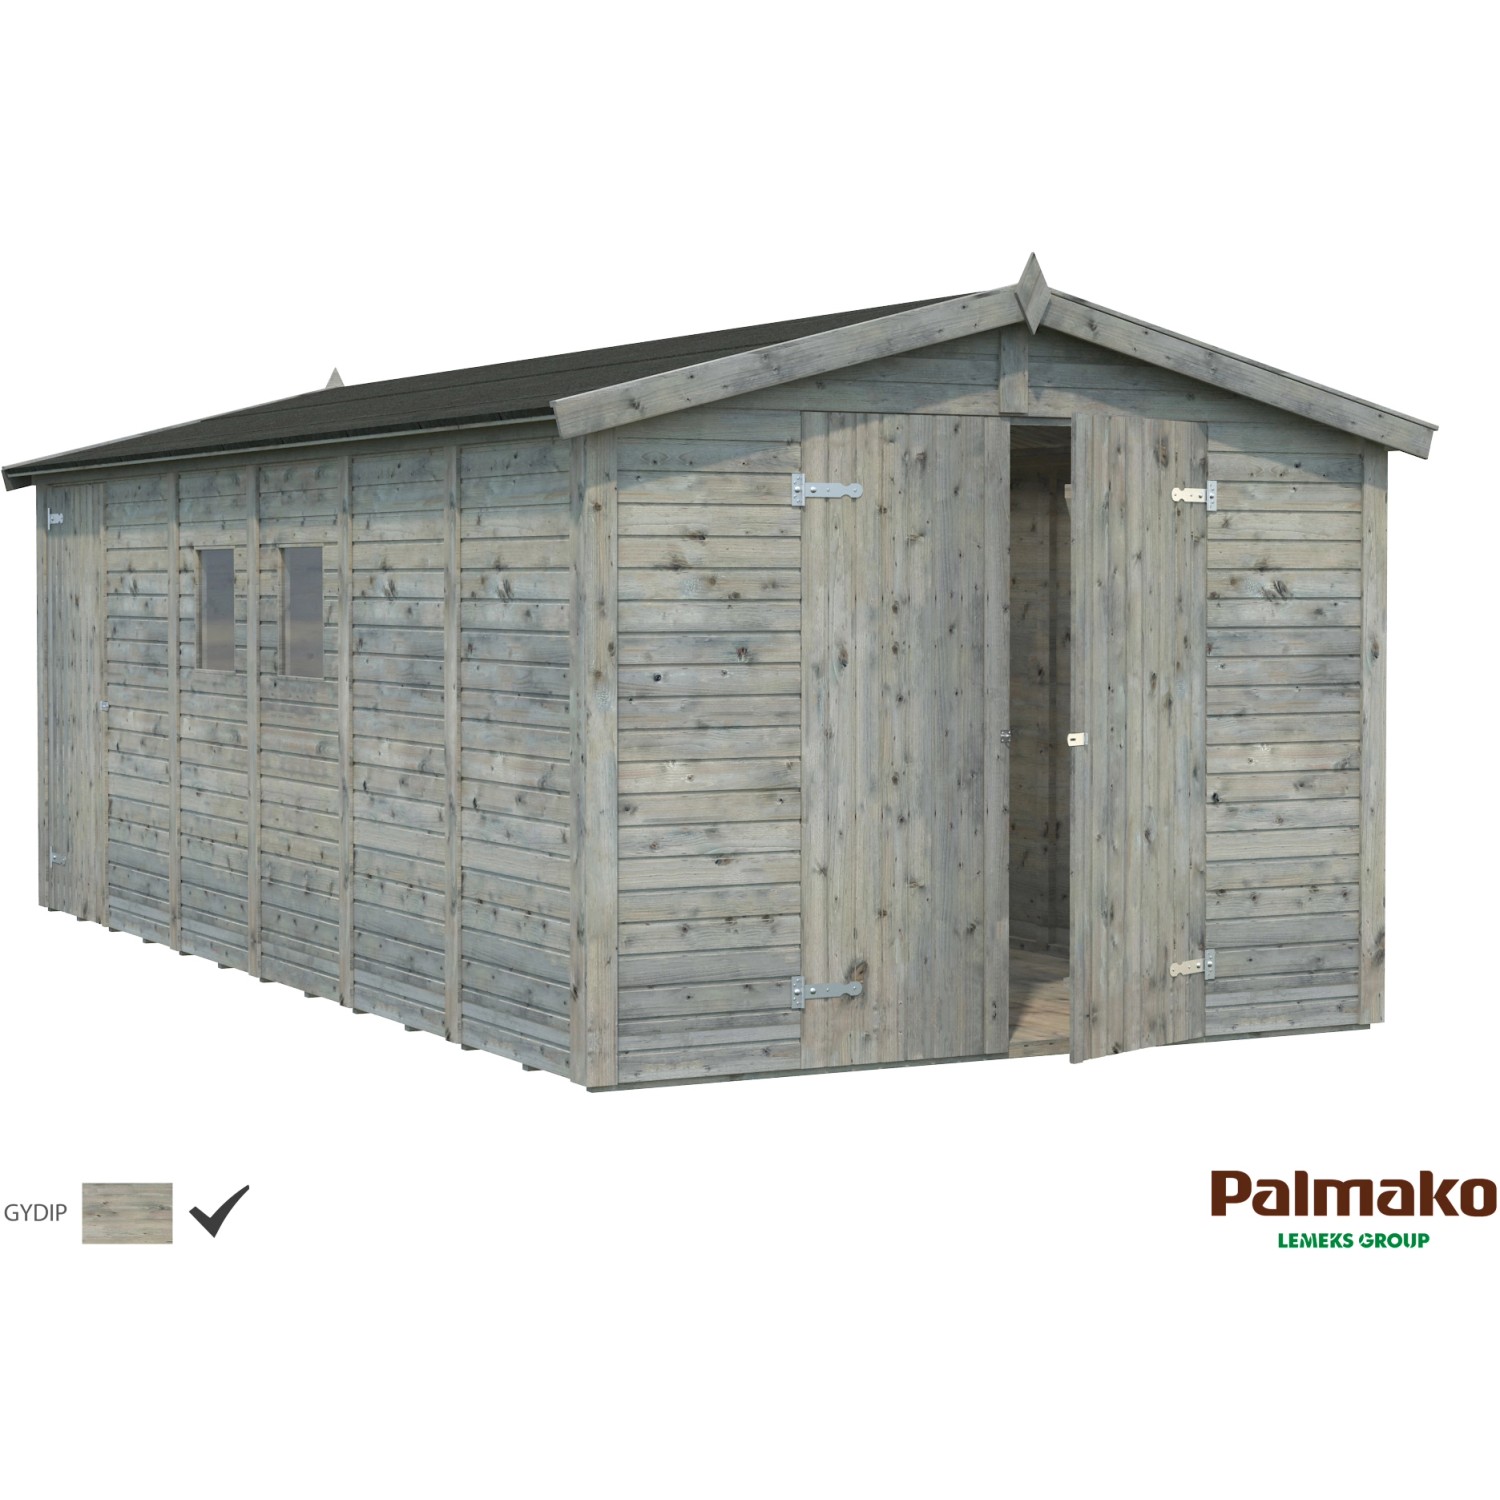 Palmako Dan Holz-Gartenhaus Grau Satteldach Tauchgrundiert 273 cm x 550 cm von Palmako